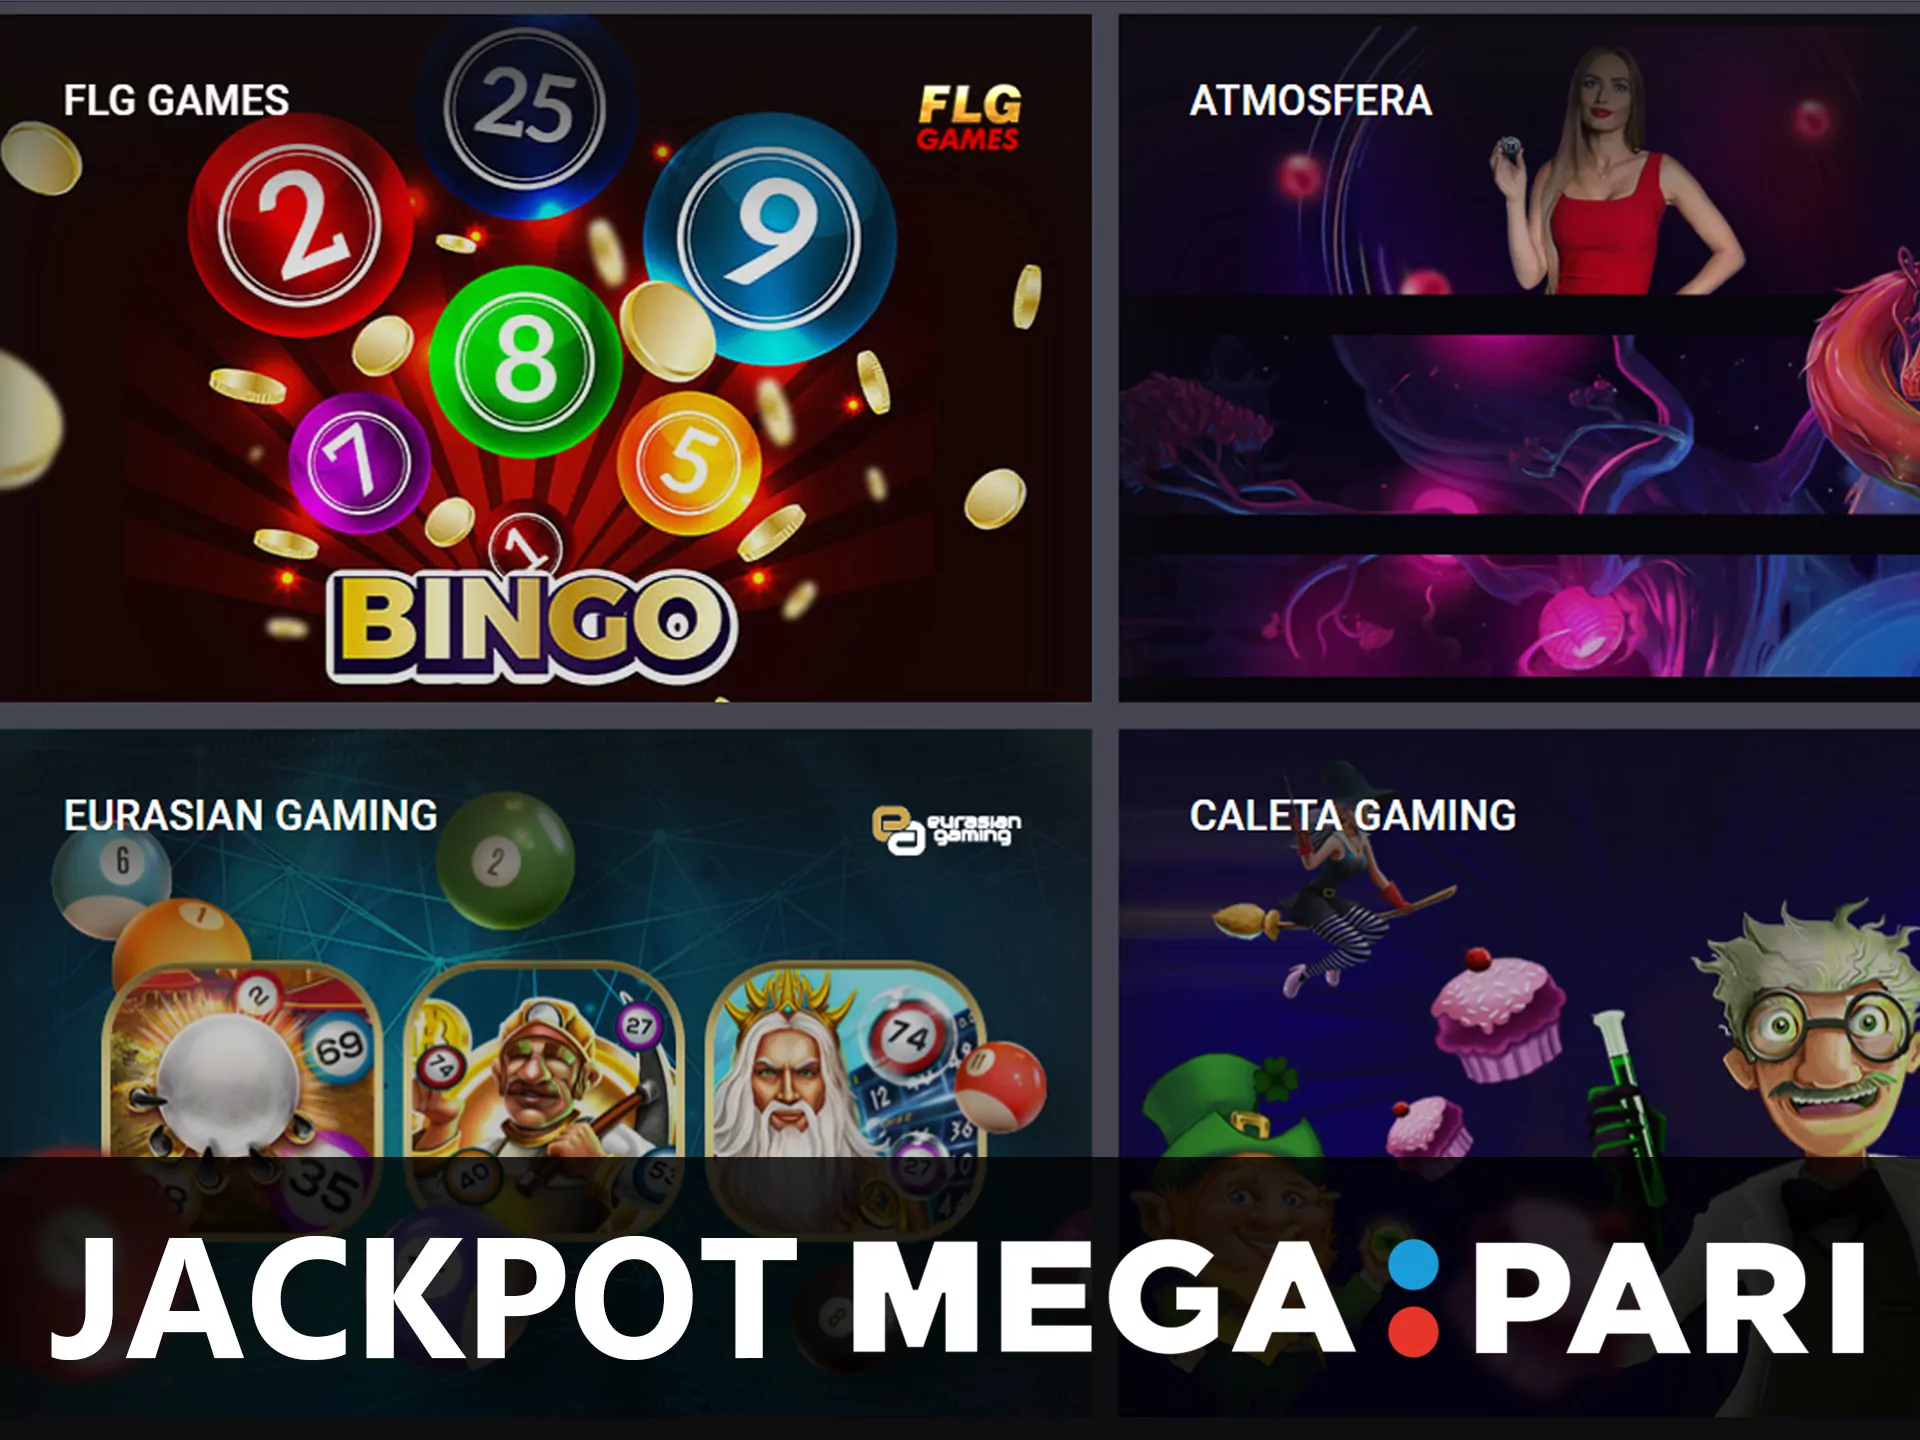 Try to win a jackpot in the Mega Pari casino.